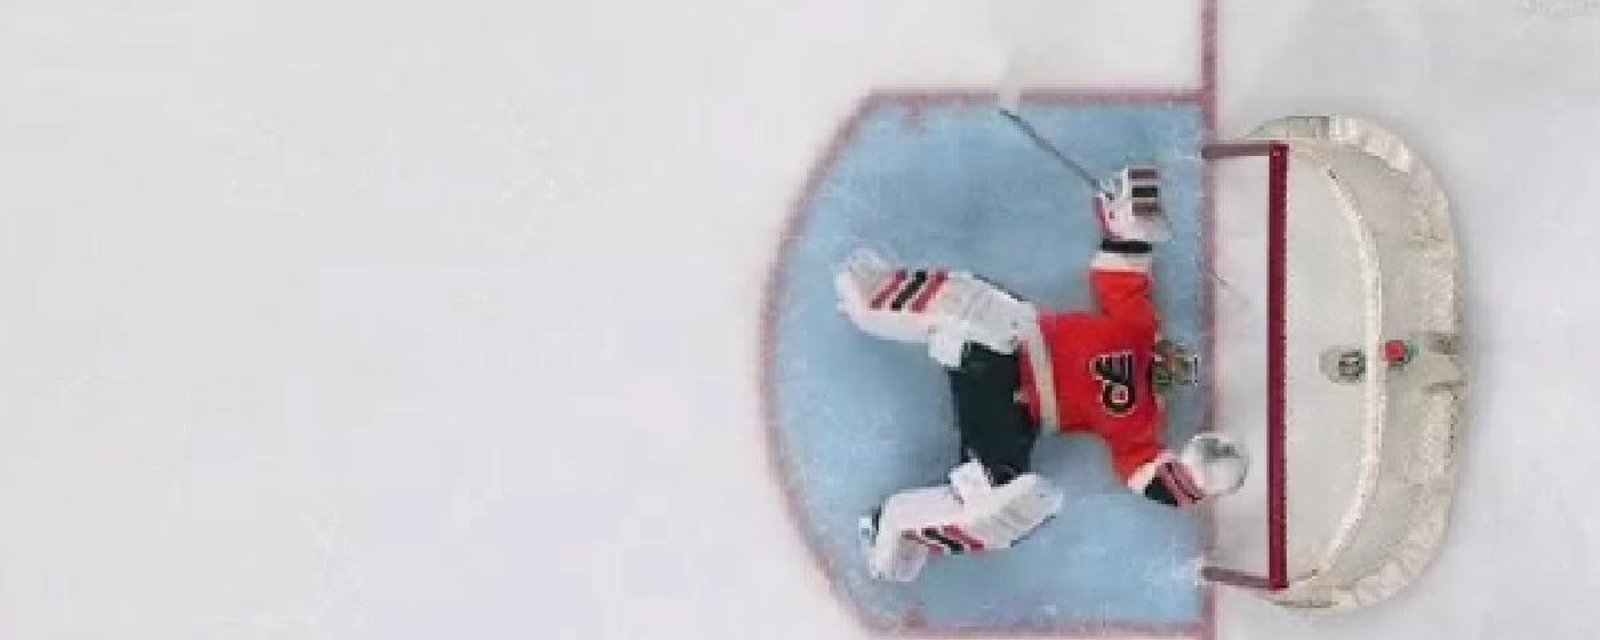 Michal Neuvirth s'effondre sur la patinoire en plein match!